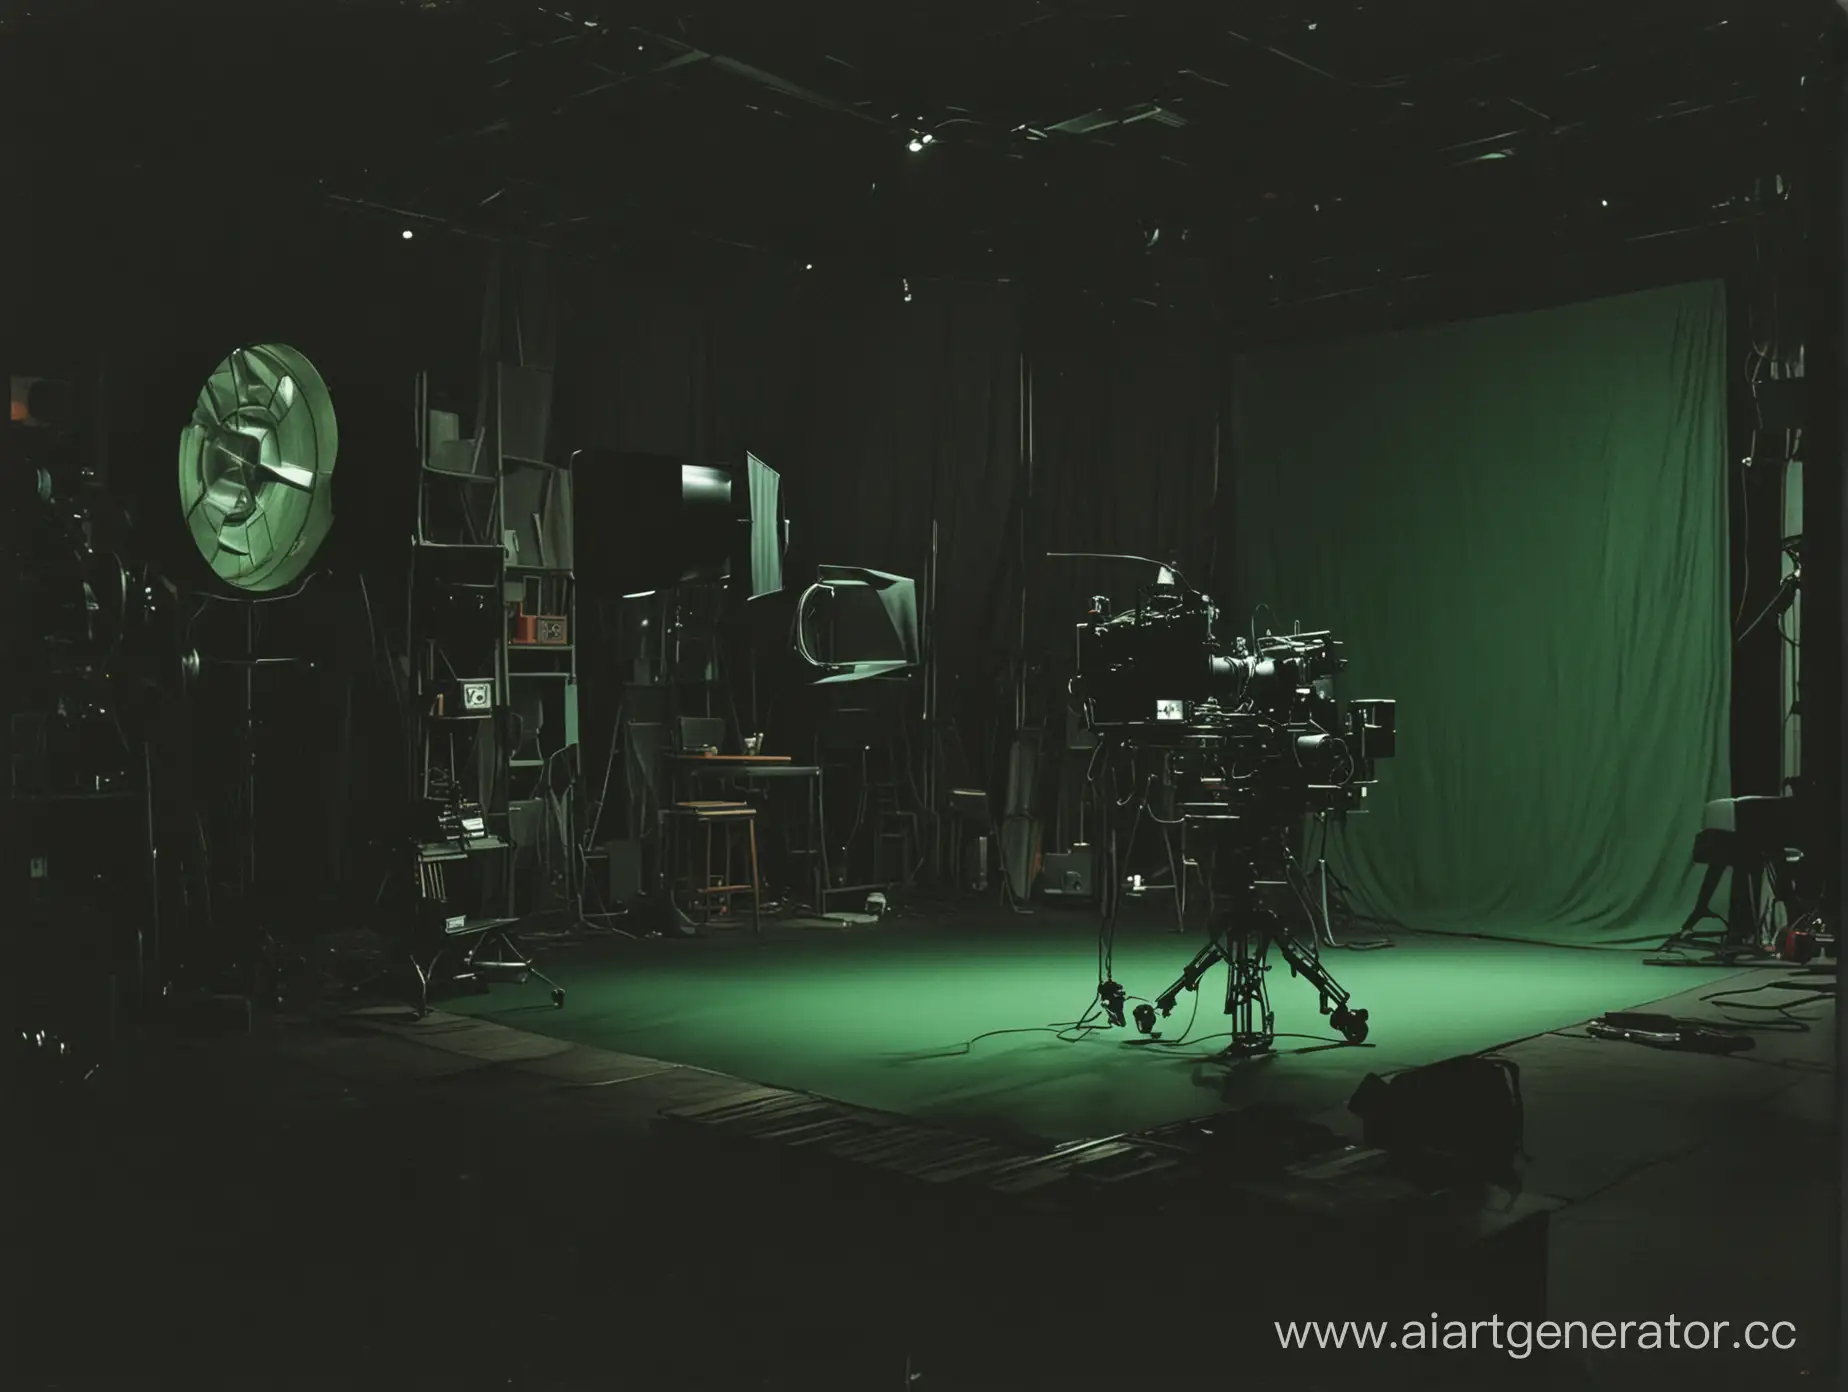 Moody-Film-Set-with-Green-Lighting